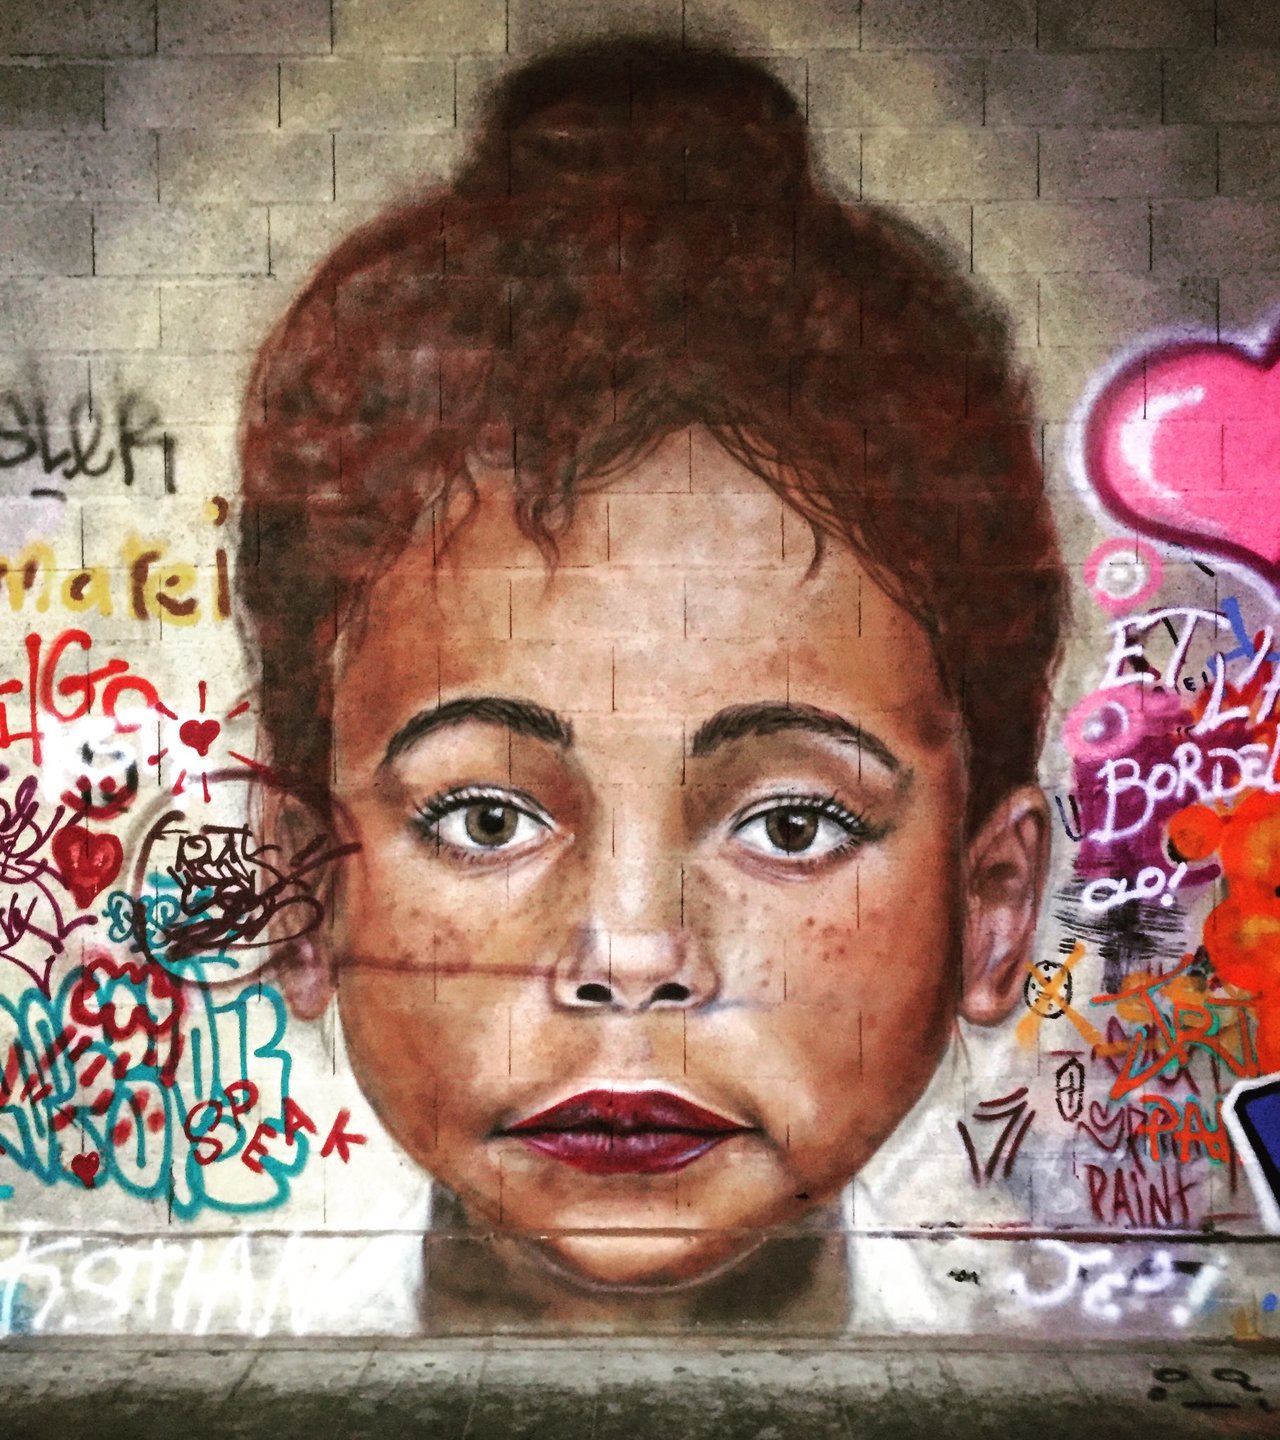 Lil'Gal by #septspraypaint #reunionisland in #paris at #laerosol  #streetart #graffiti #graff #spray #bombing #wall #urbanart #paris https://t.co/tYcf5M647c